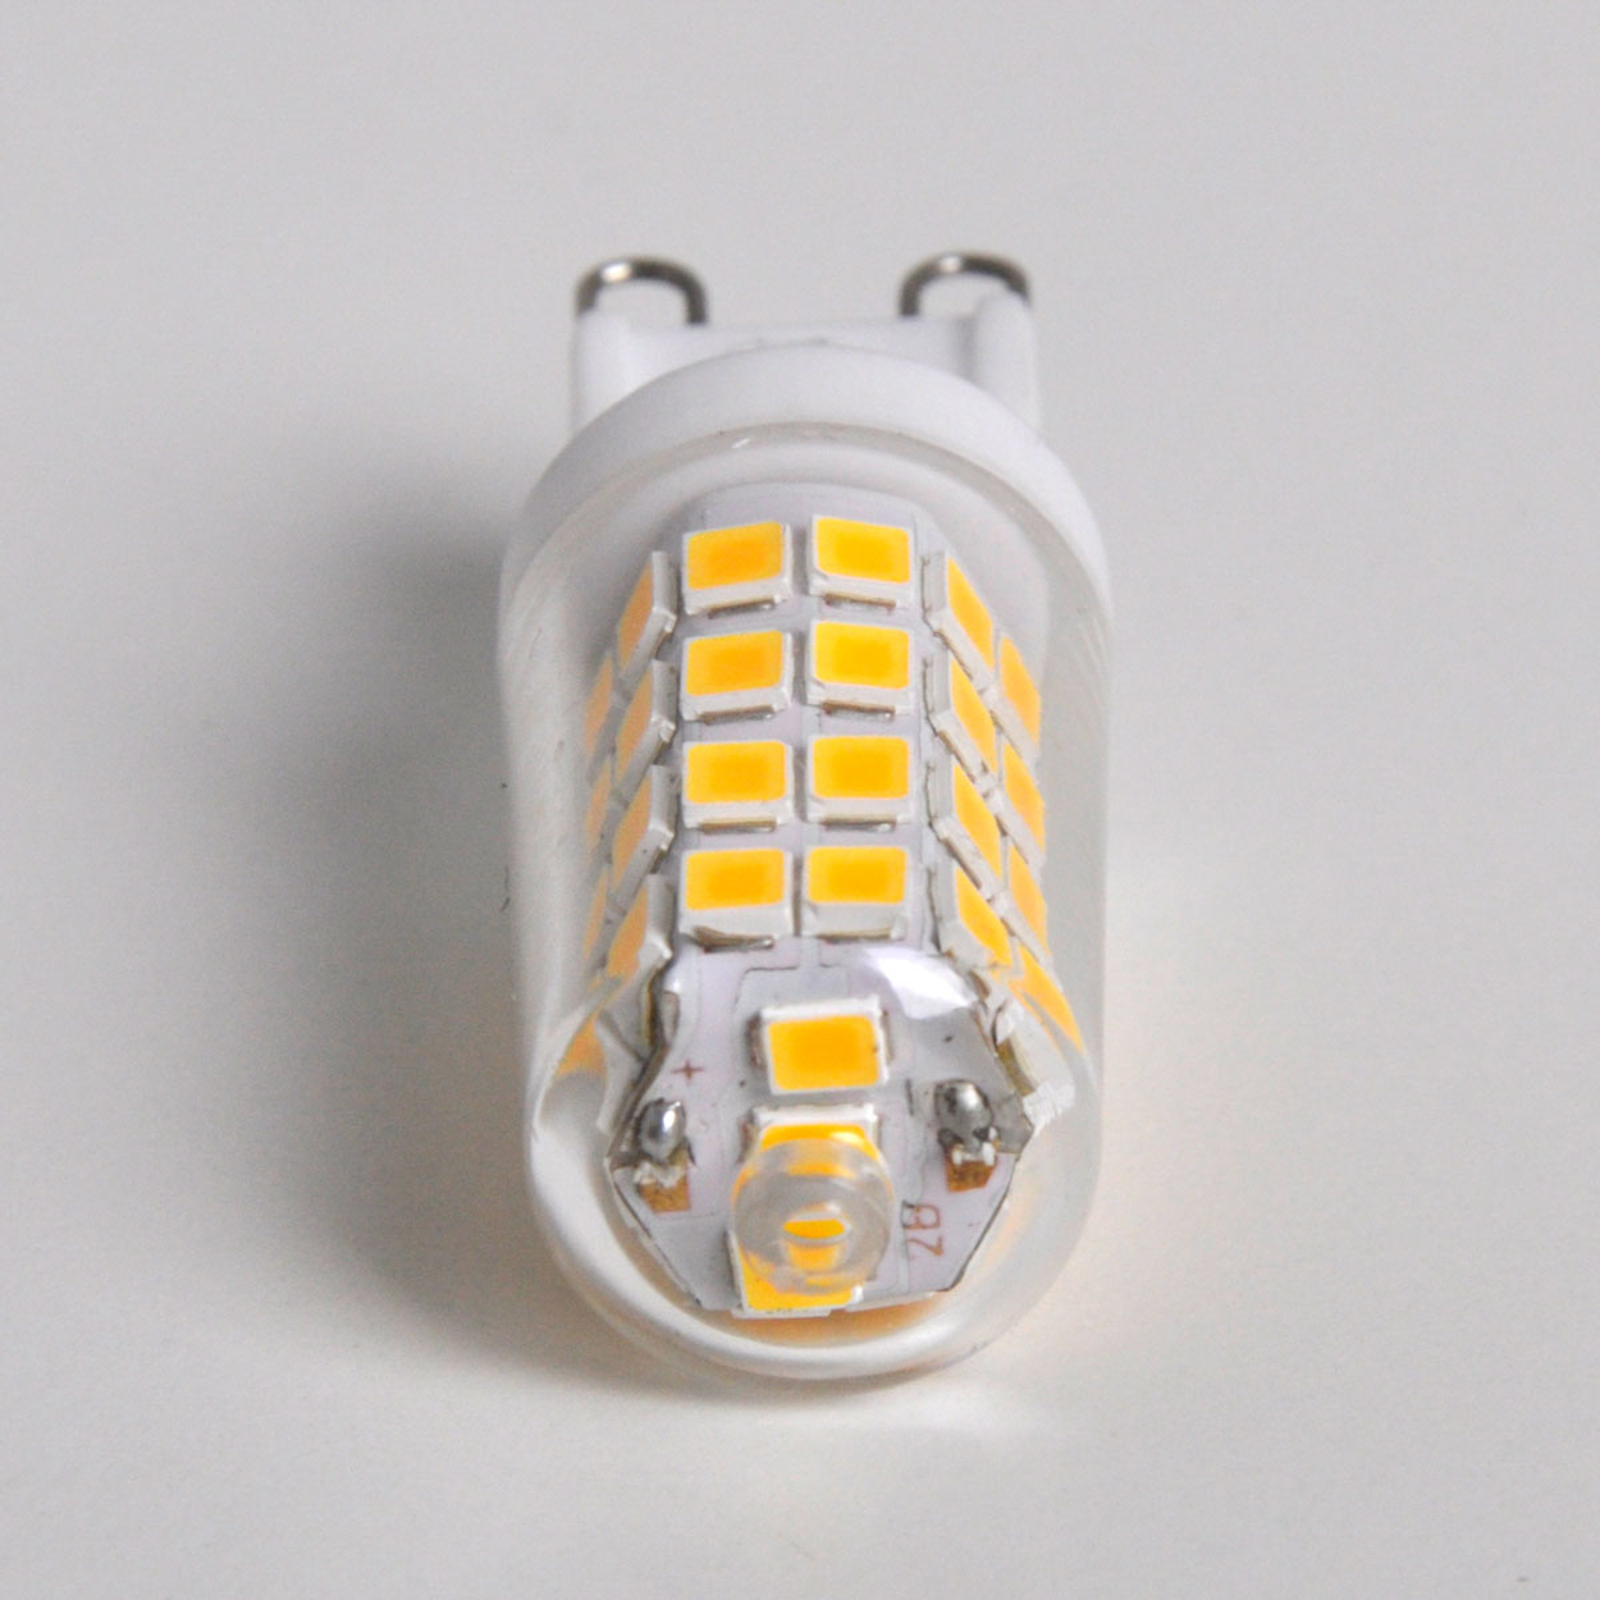 LED stiftlamp G9 3W, warmwit, 330 lumen 10 per set